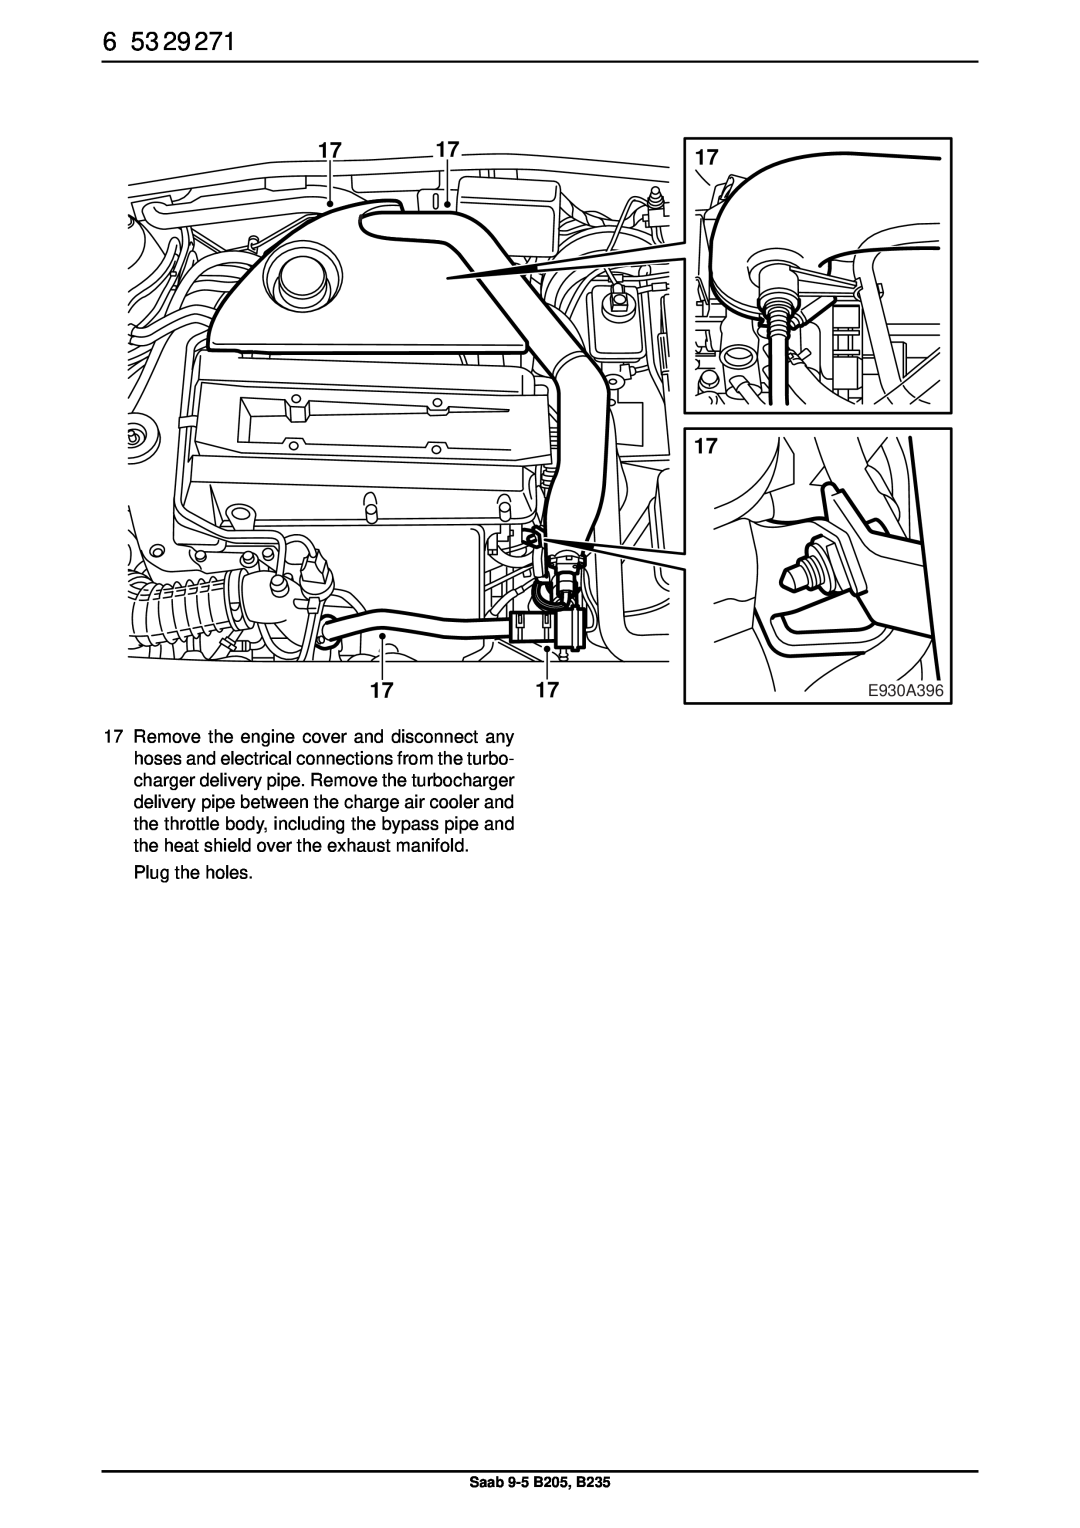 Saab installation instructions Plug the holes, E930A396, Saab 9-5 B205, B235 